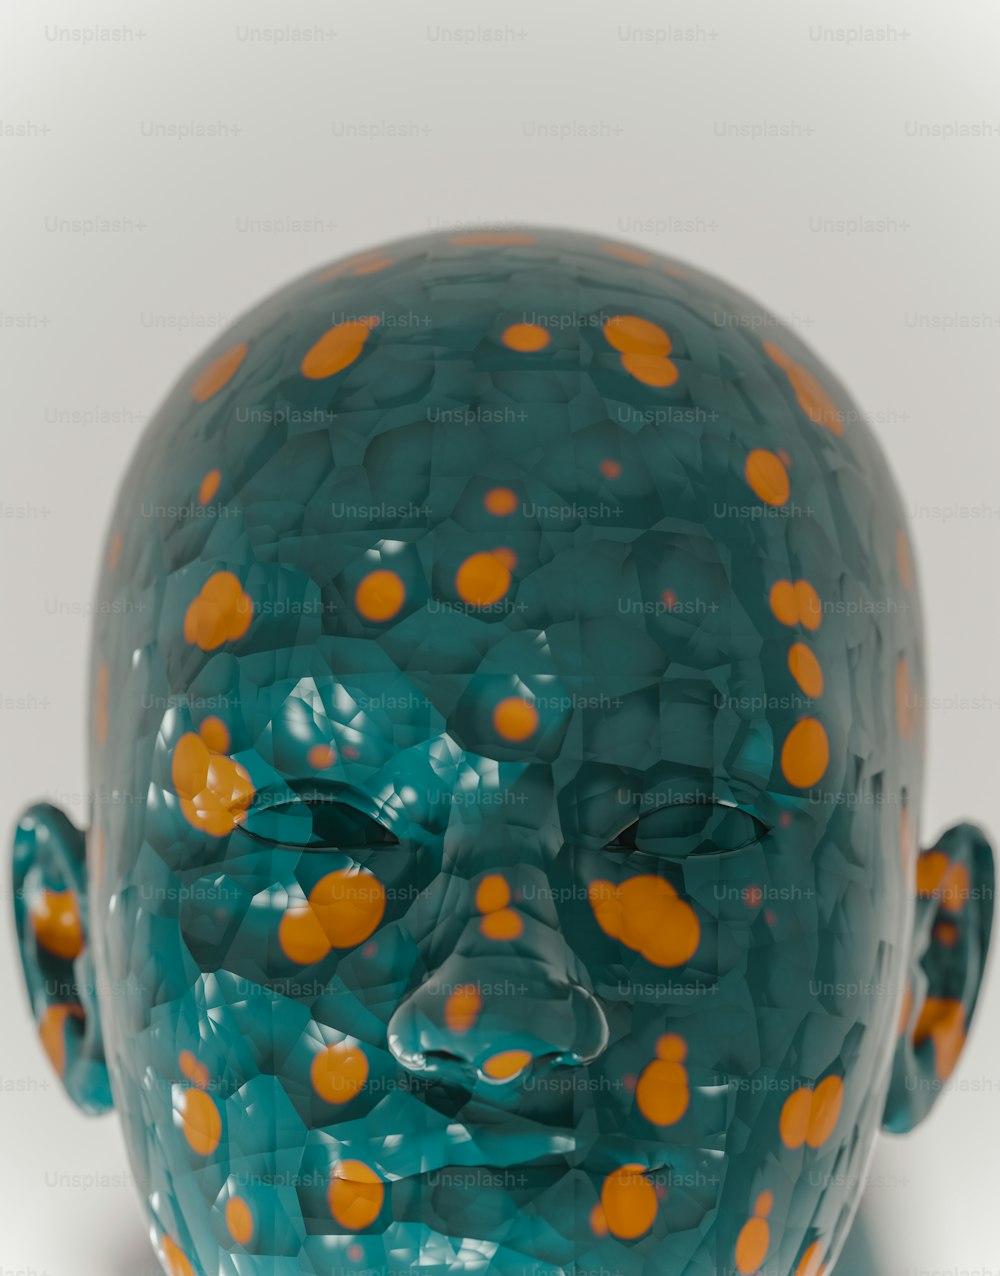 a blue vase with orange dots on it